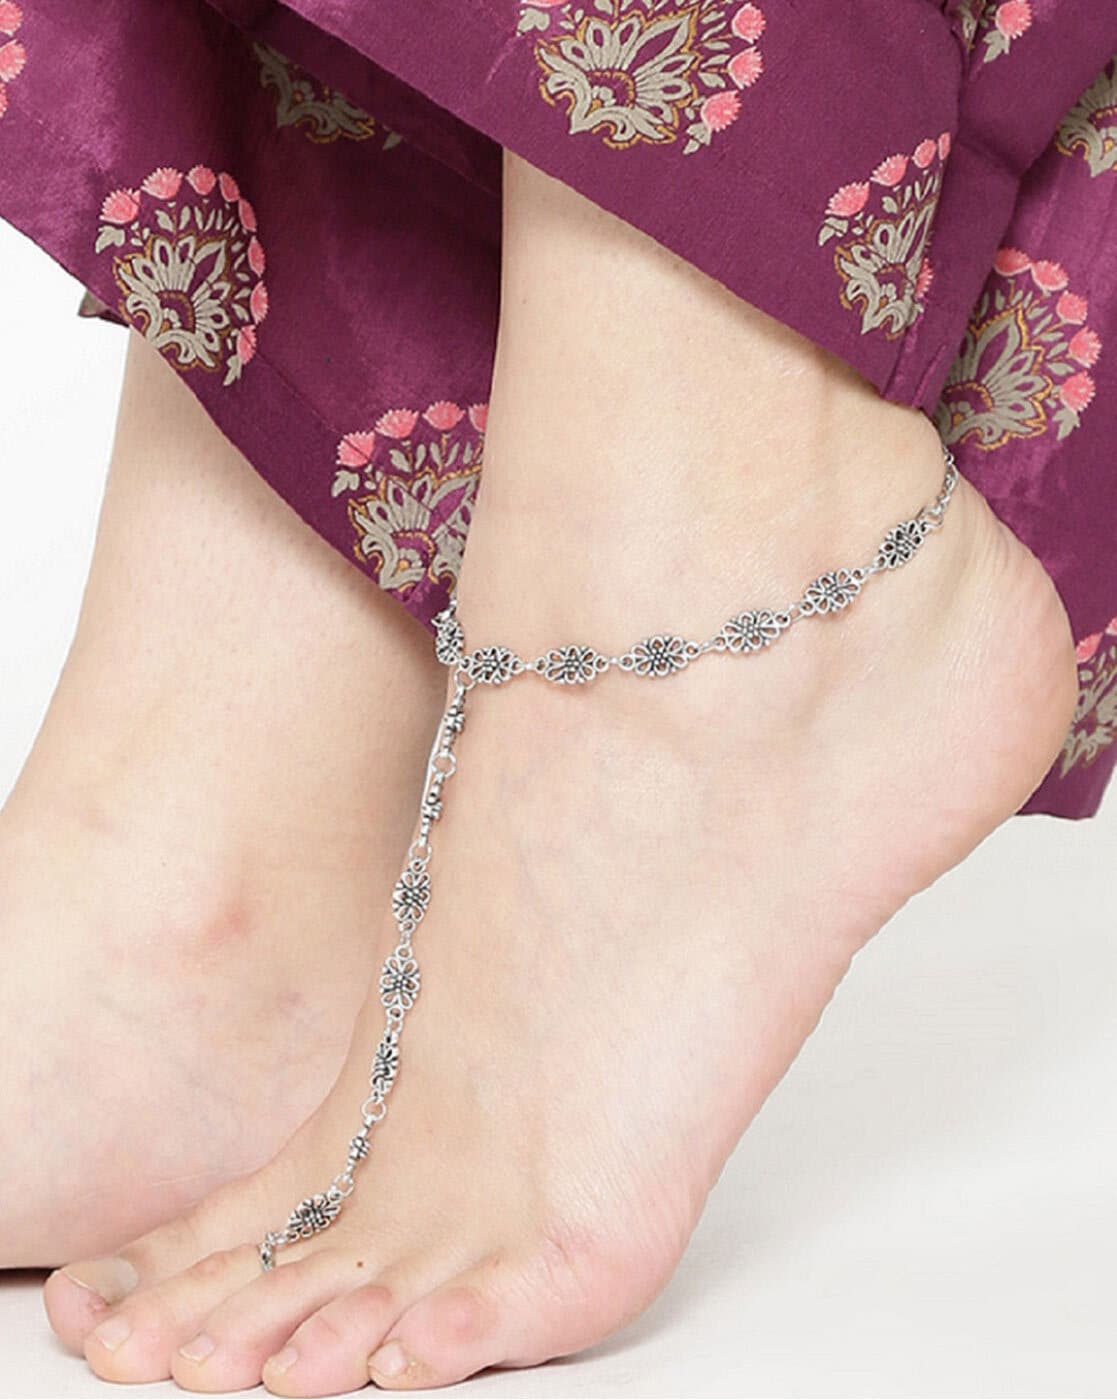 18 Gorgeous Toe Ring Designs For Brides That You Should Bookmark ASAP! |  Silver anklets designs, Anklet designs, Bridal anklet